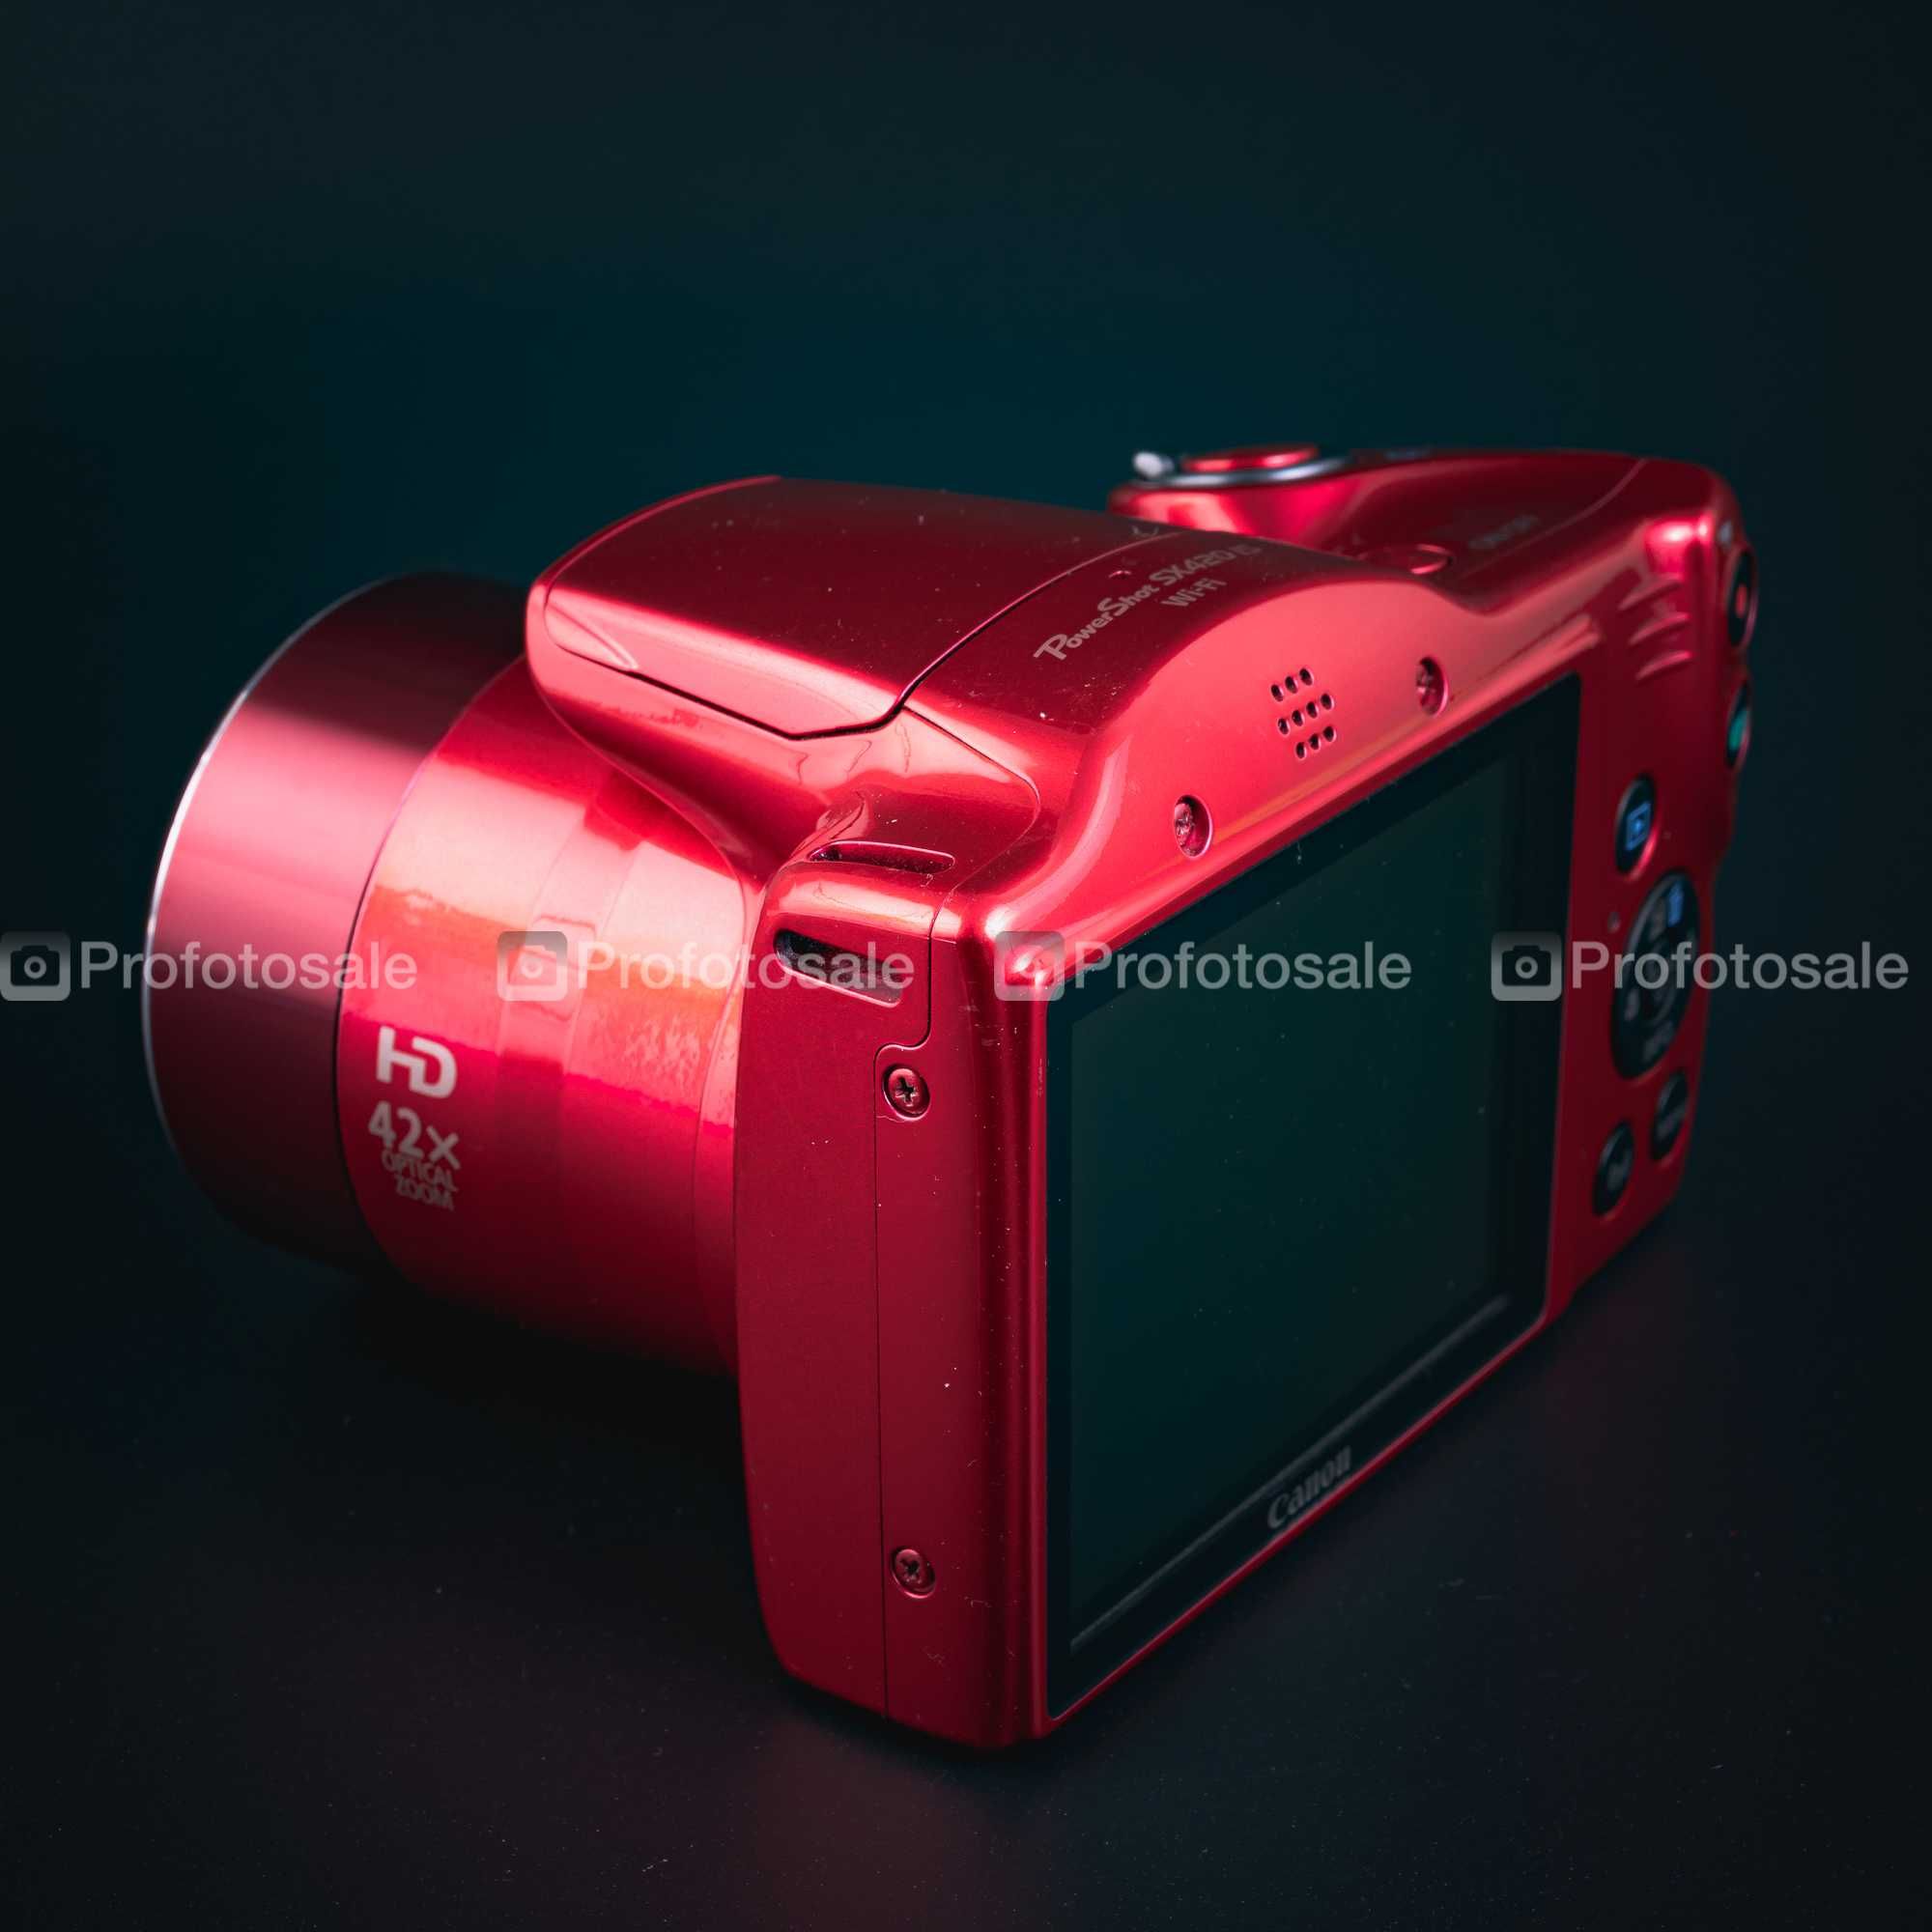 Фотоапарат Canon SX 420 IS